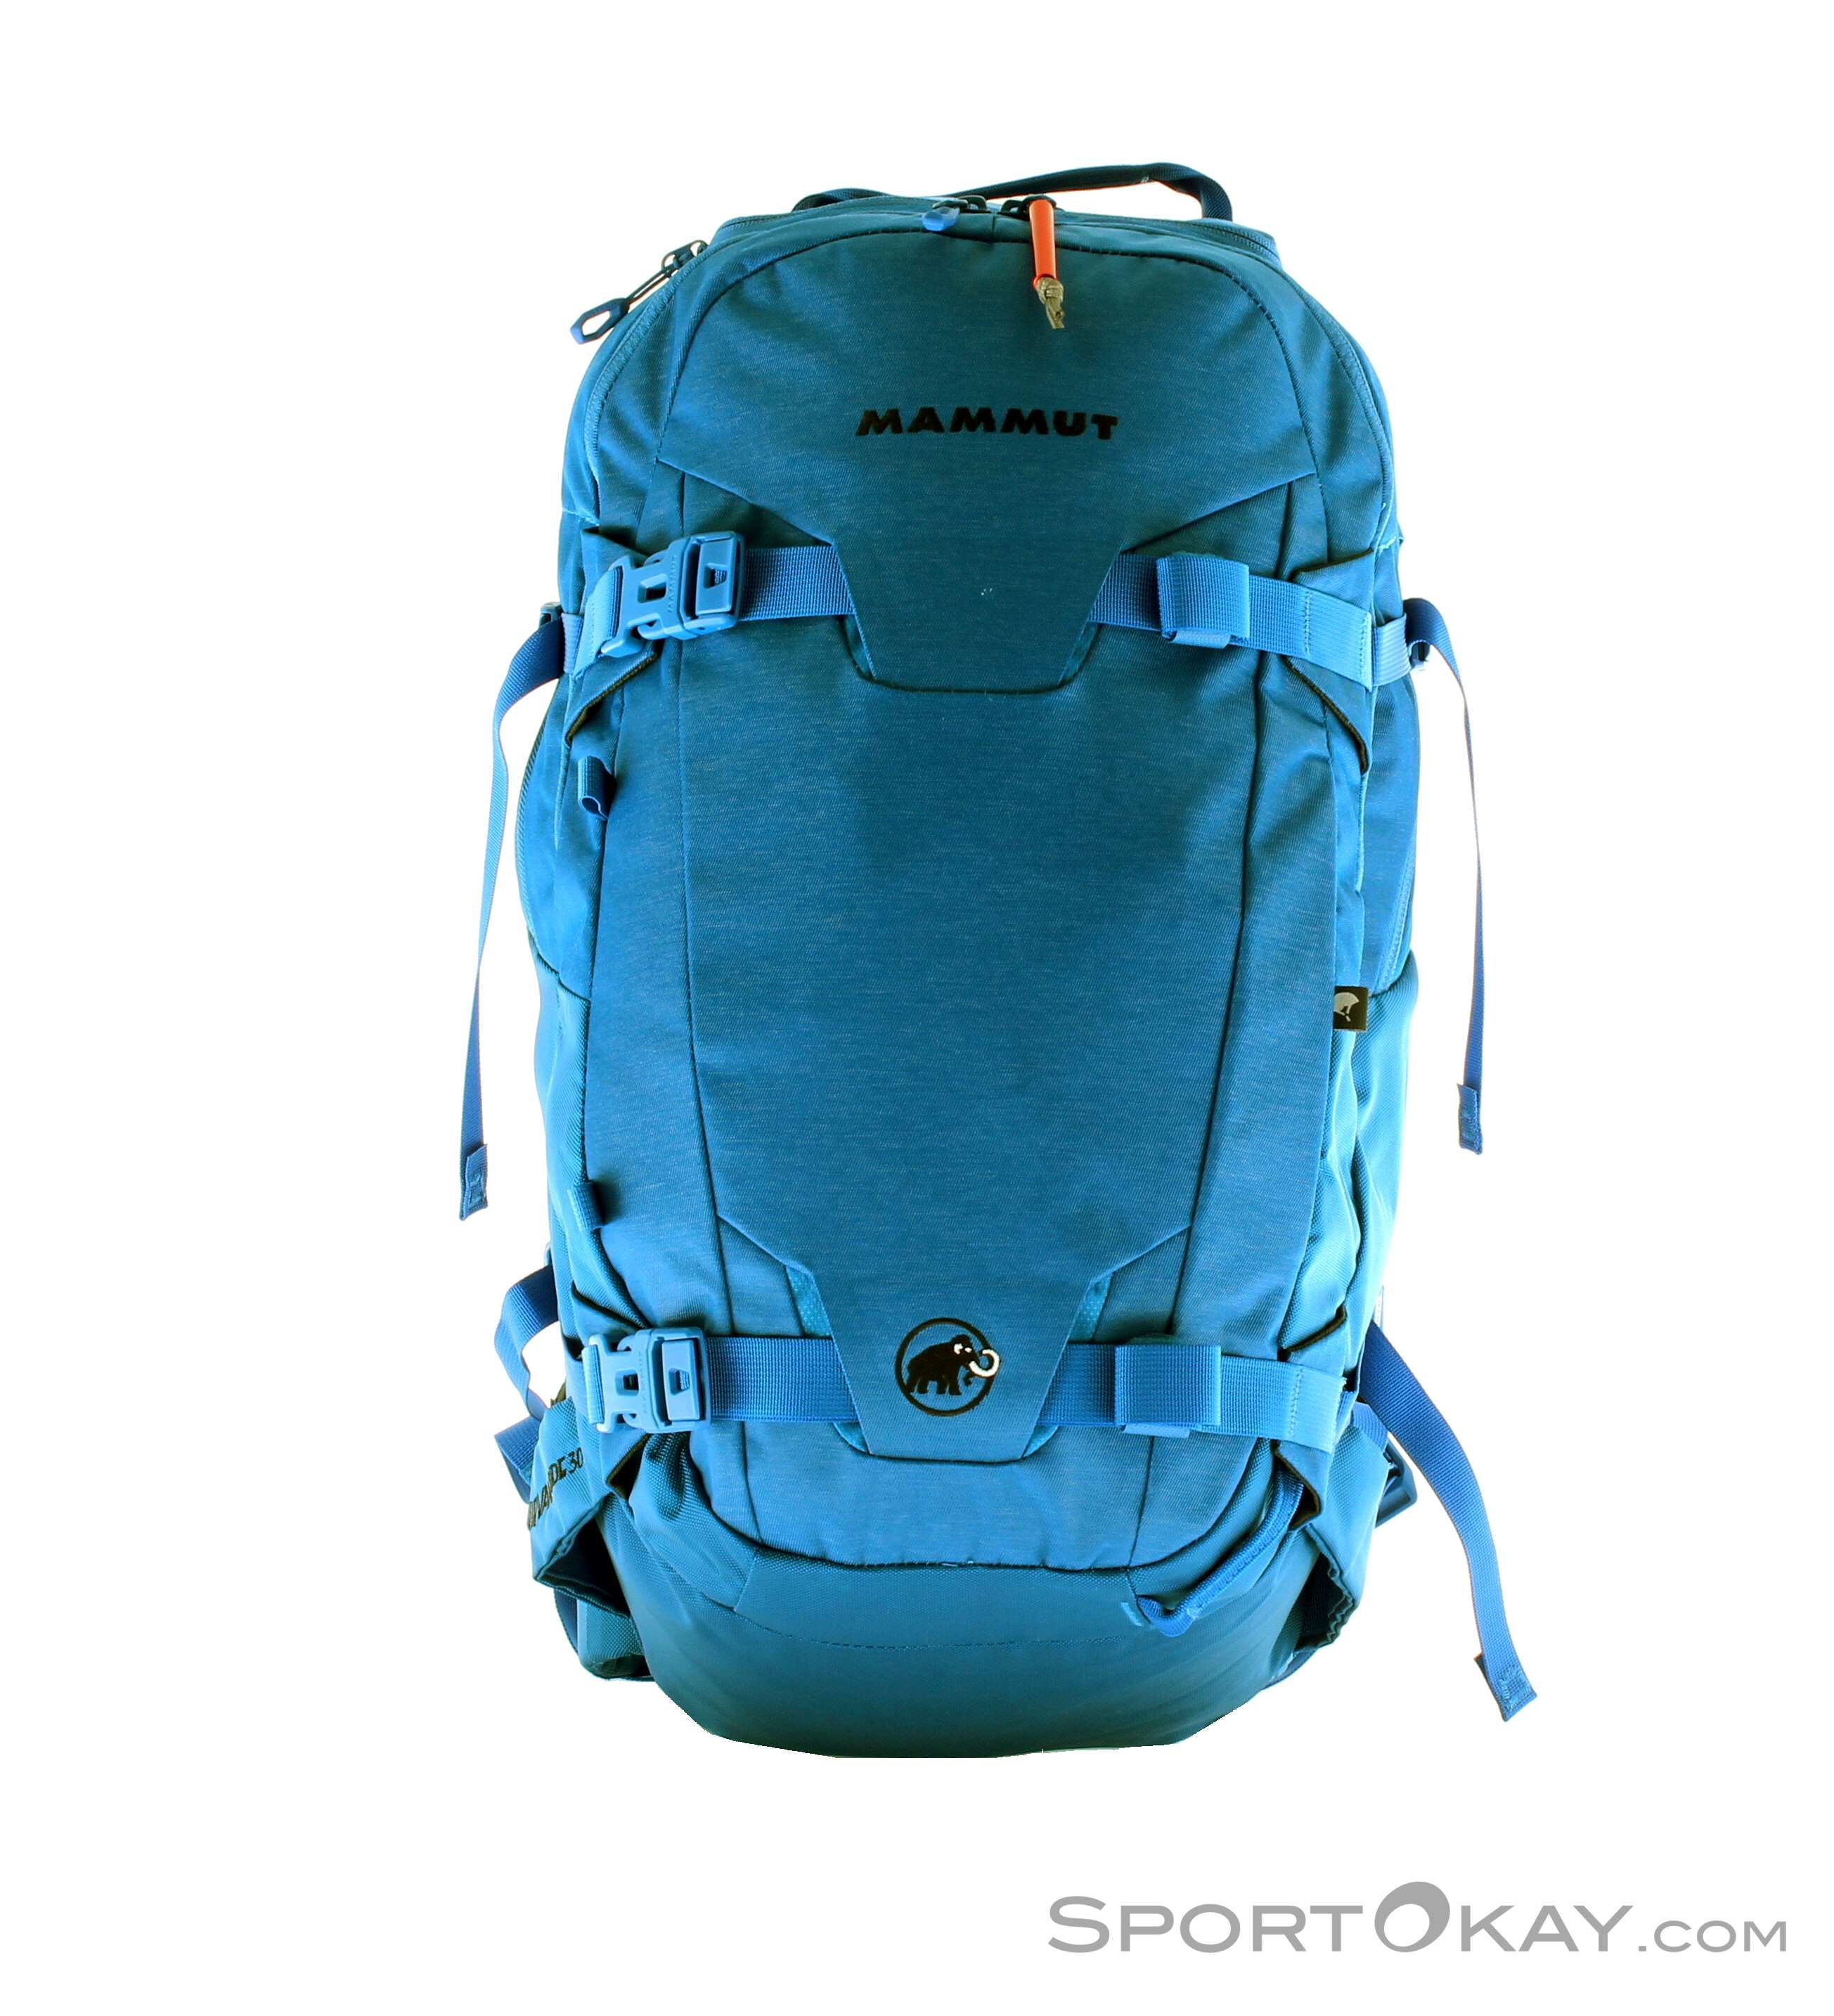 Mammut Nirvana Ride 30l Backpack - Backpacks - Safety - Ski